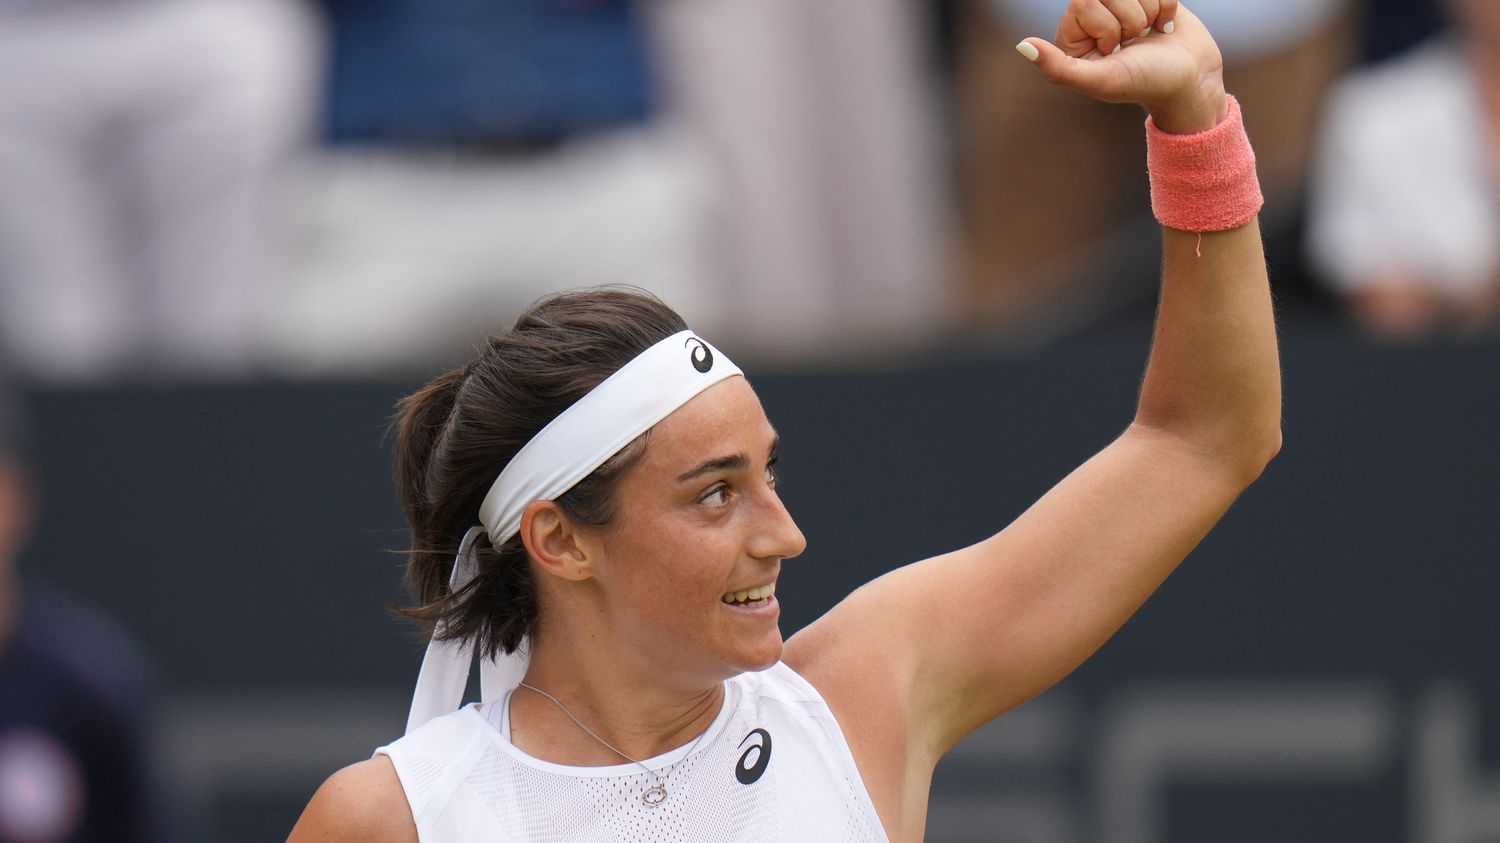 Tennis : Caroline Garcia élimine la n°1 mondiale Iga Swiatek en quart de finale à Varsovie - franceinfo